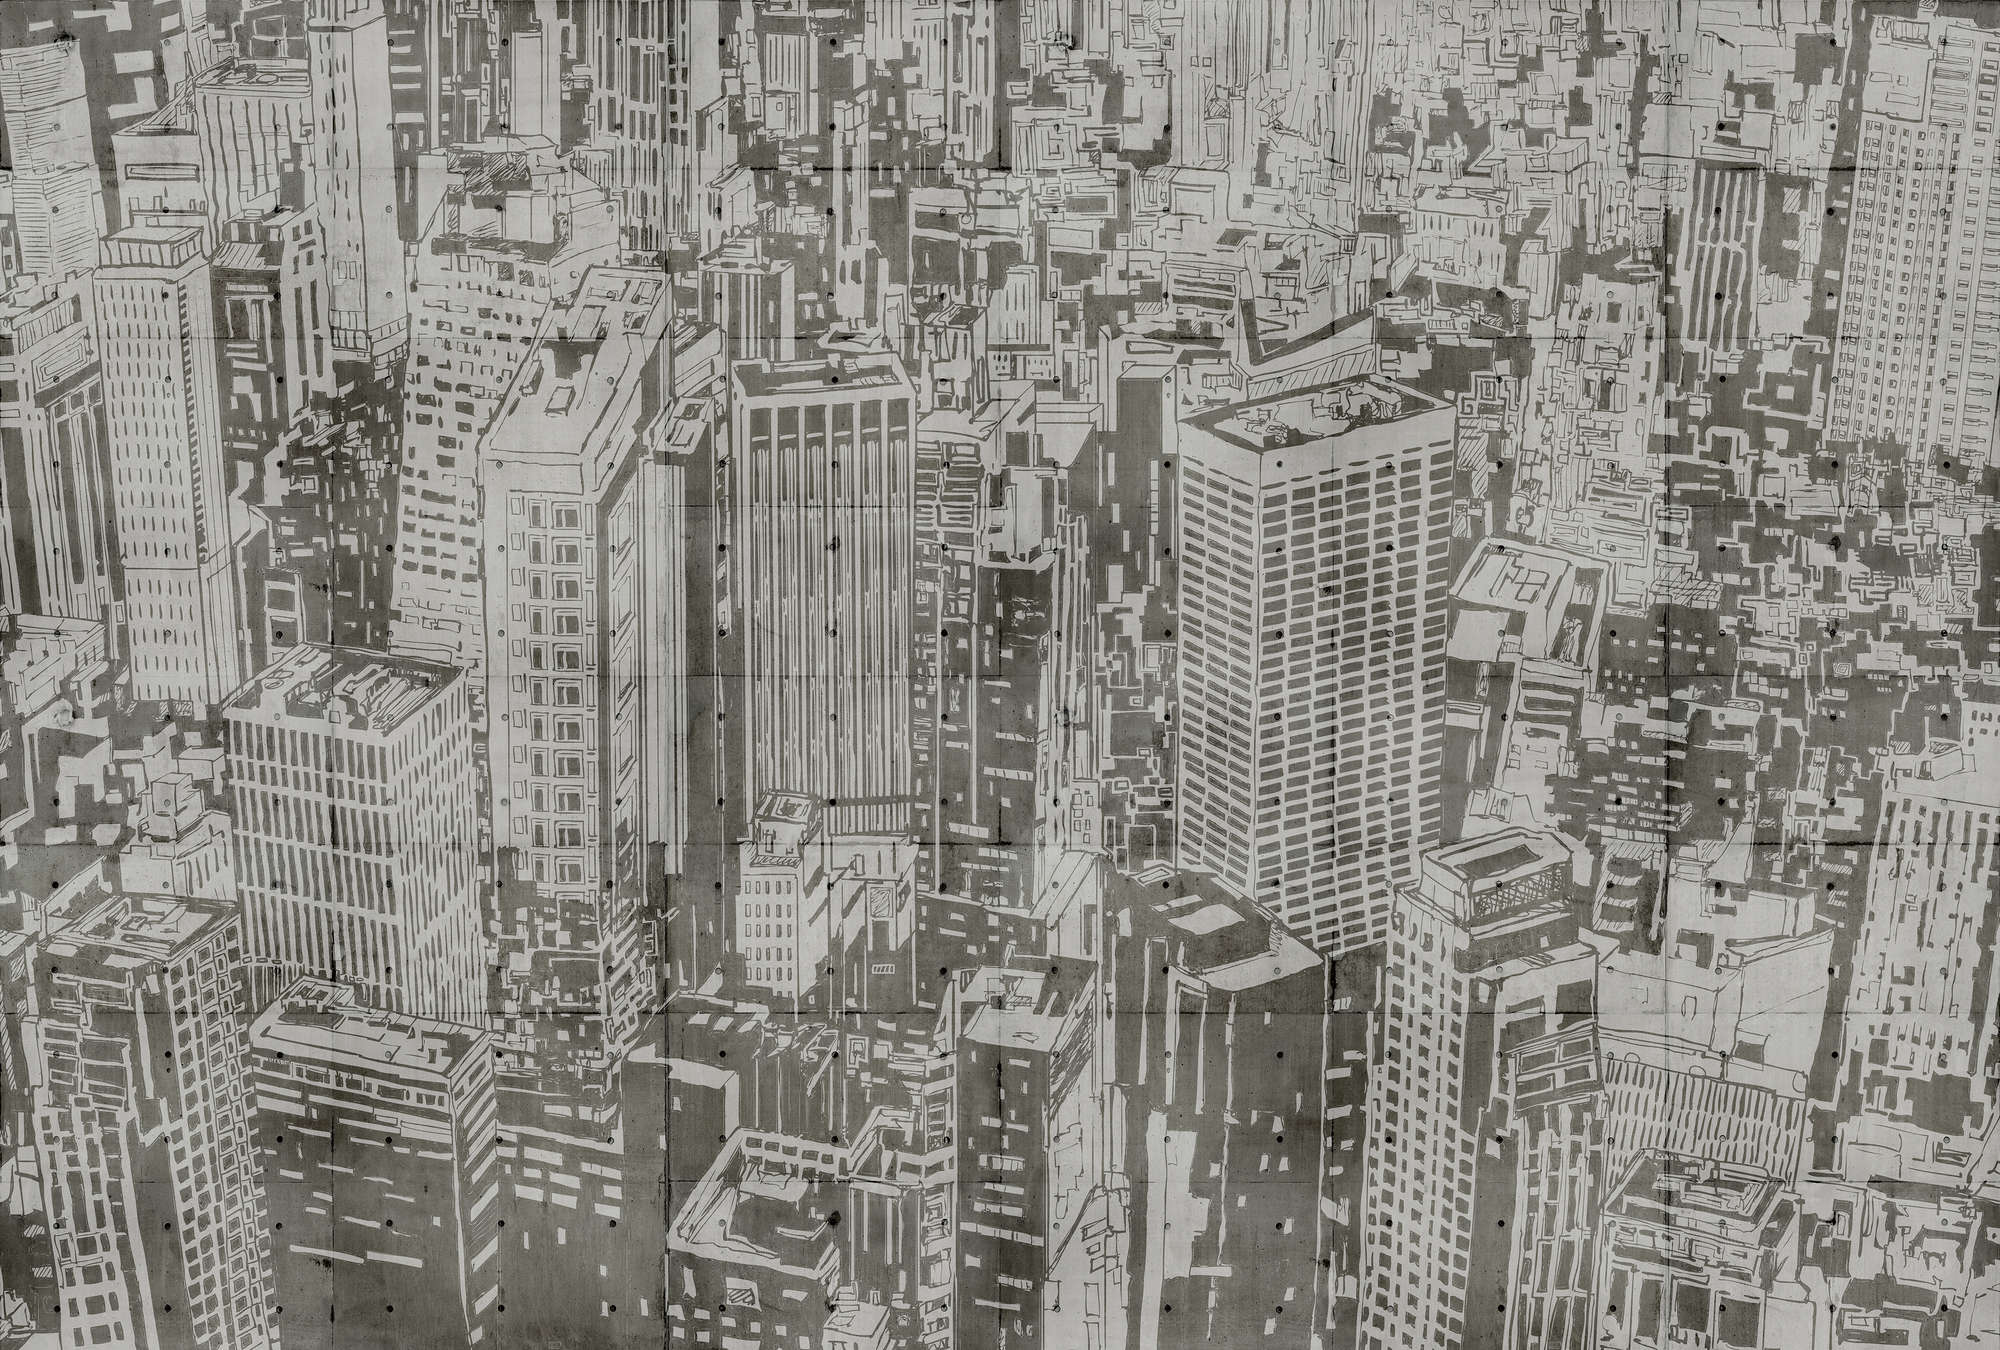             Downtown 2 - Fototapete in Beton Struktur im New York Look – Beige, Braun | Perlmutt Glattvlies
        